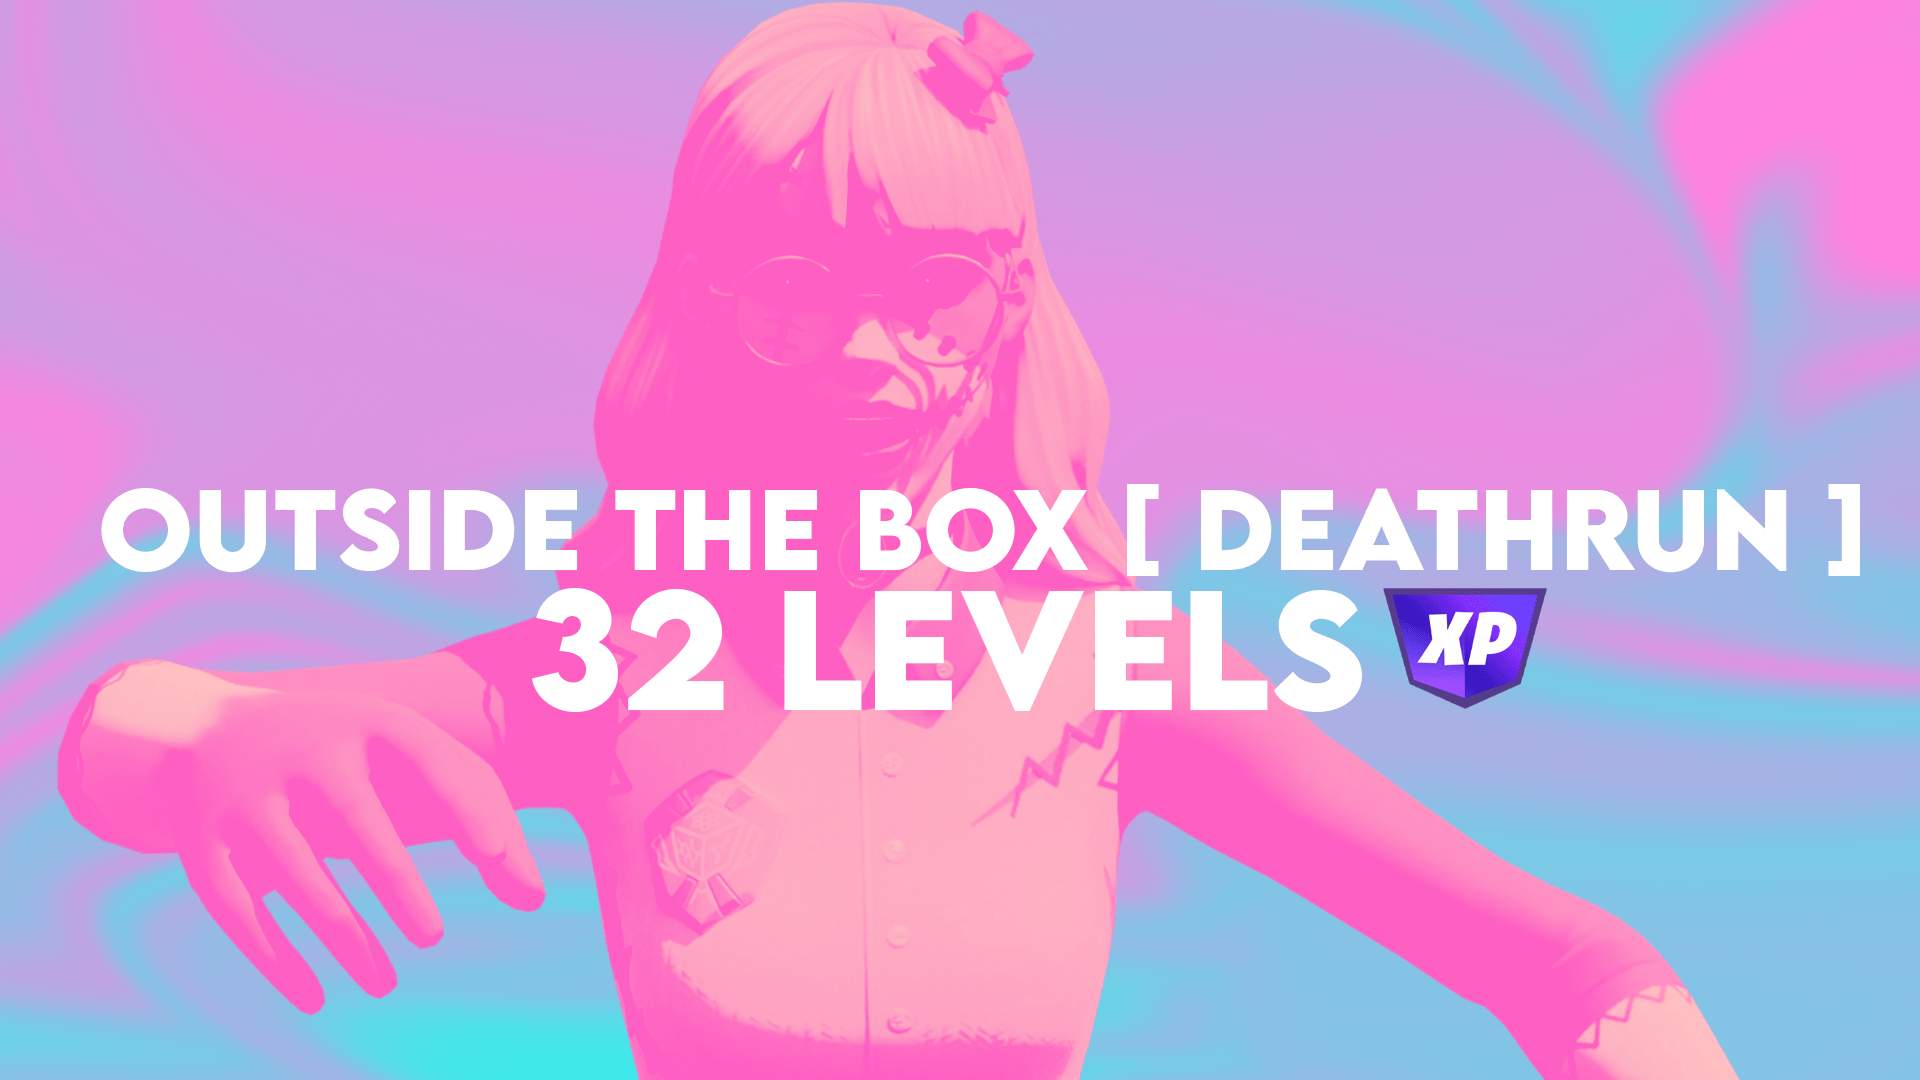 OUTSIDE THE BOX [ DEATHRUN ] 32 LEVELS